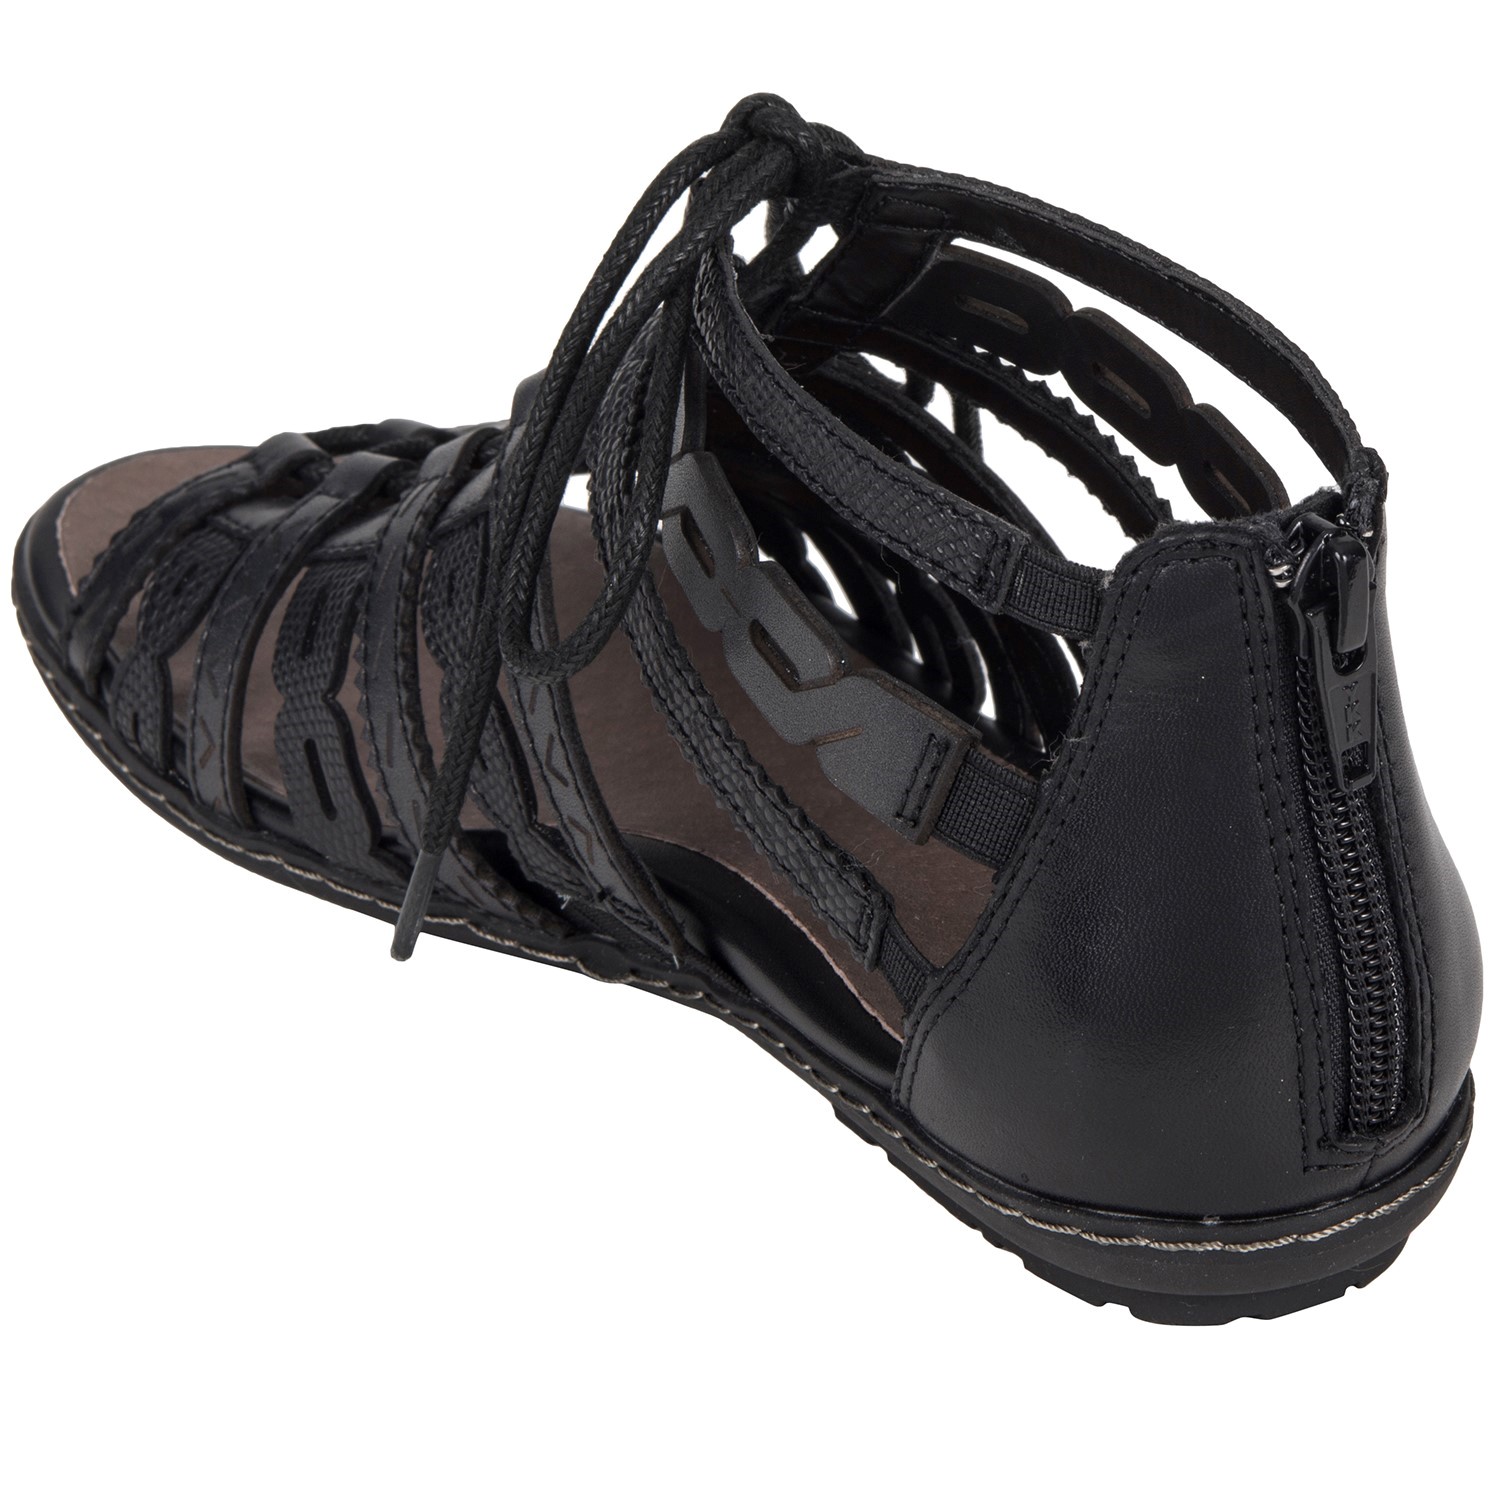 orthotic gladiator sandals